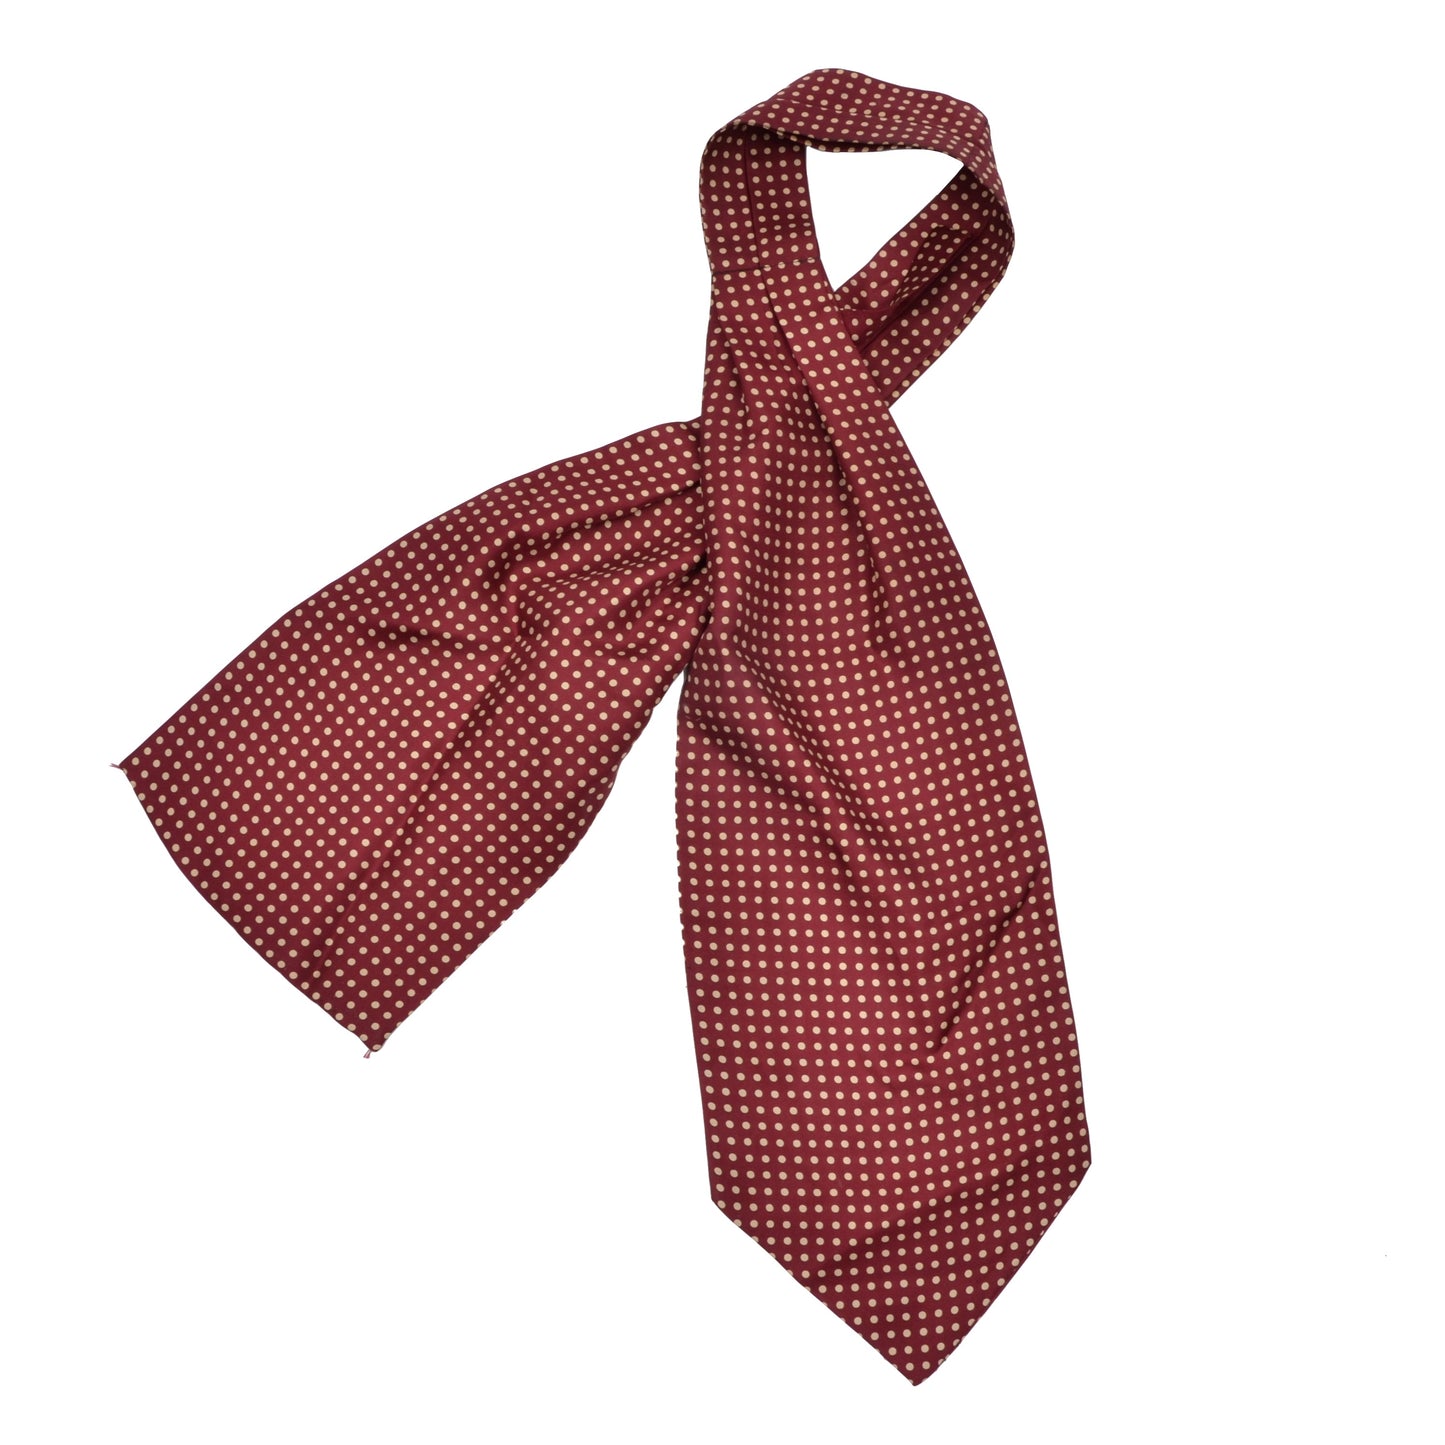 Silk Ascot/Cravatte Tie - Burgundy Polka Dot